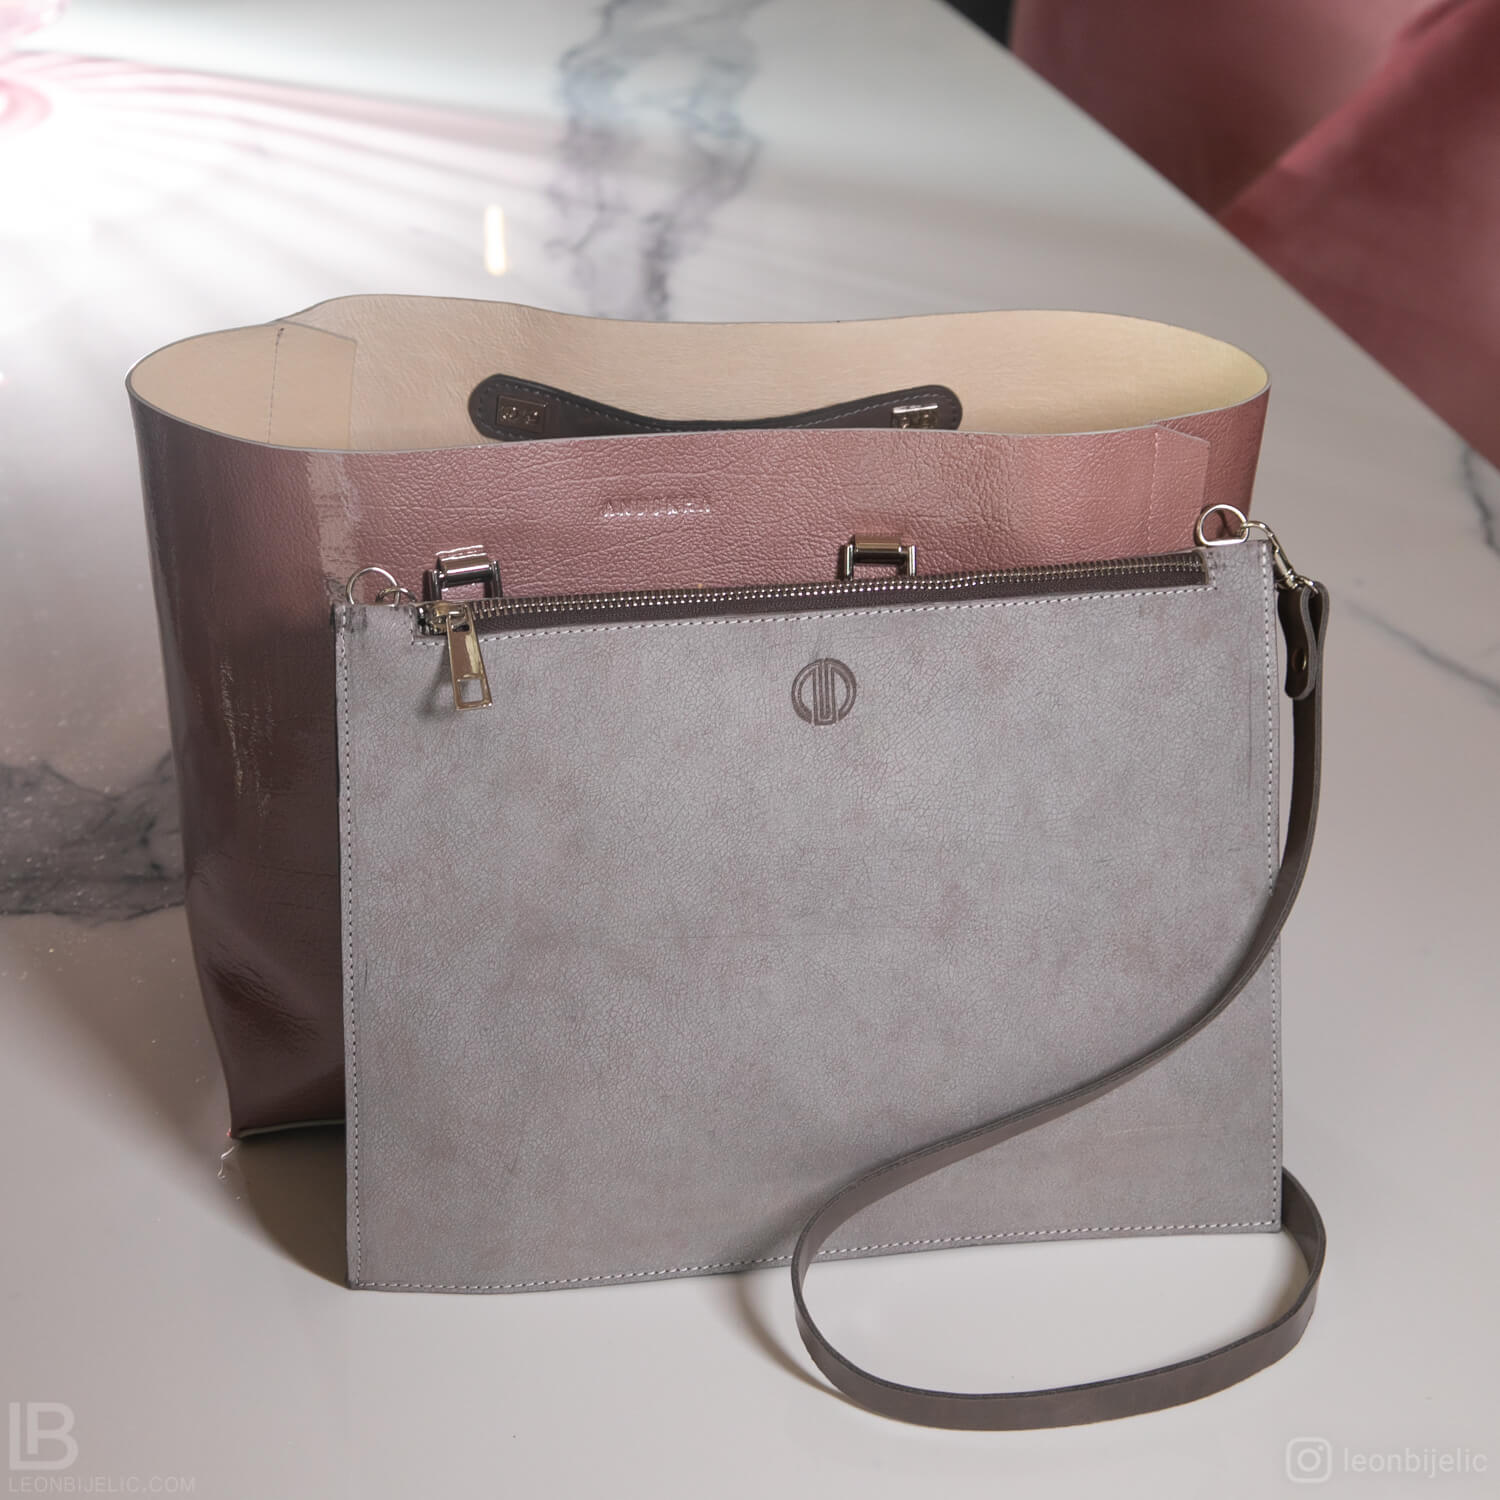 Anuskha bag torbe nova kolekcija new collection ženske moderne luksuzne stil poznate ličnosti popularne